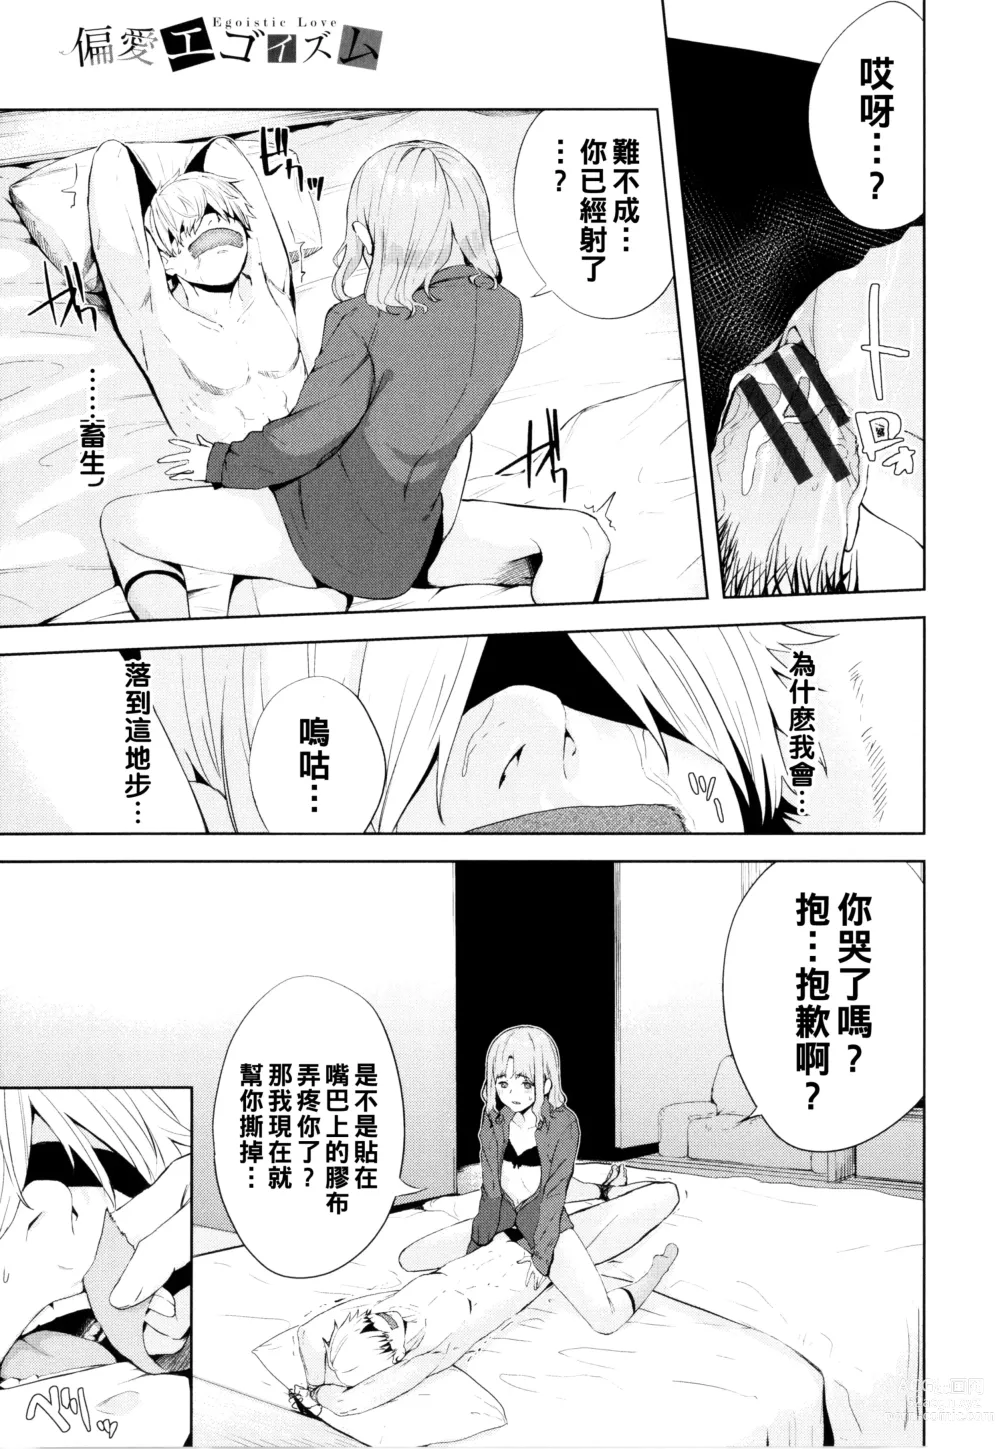 Page 11 of manga Mekakushi